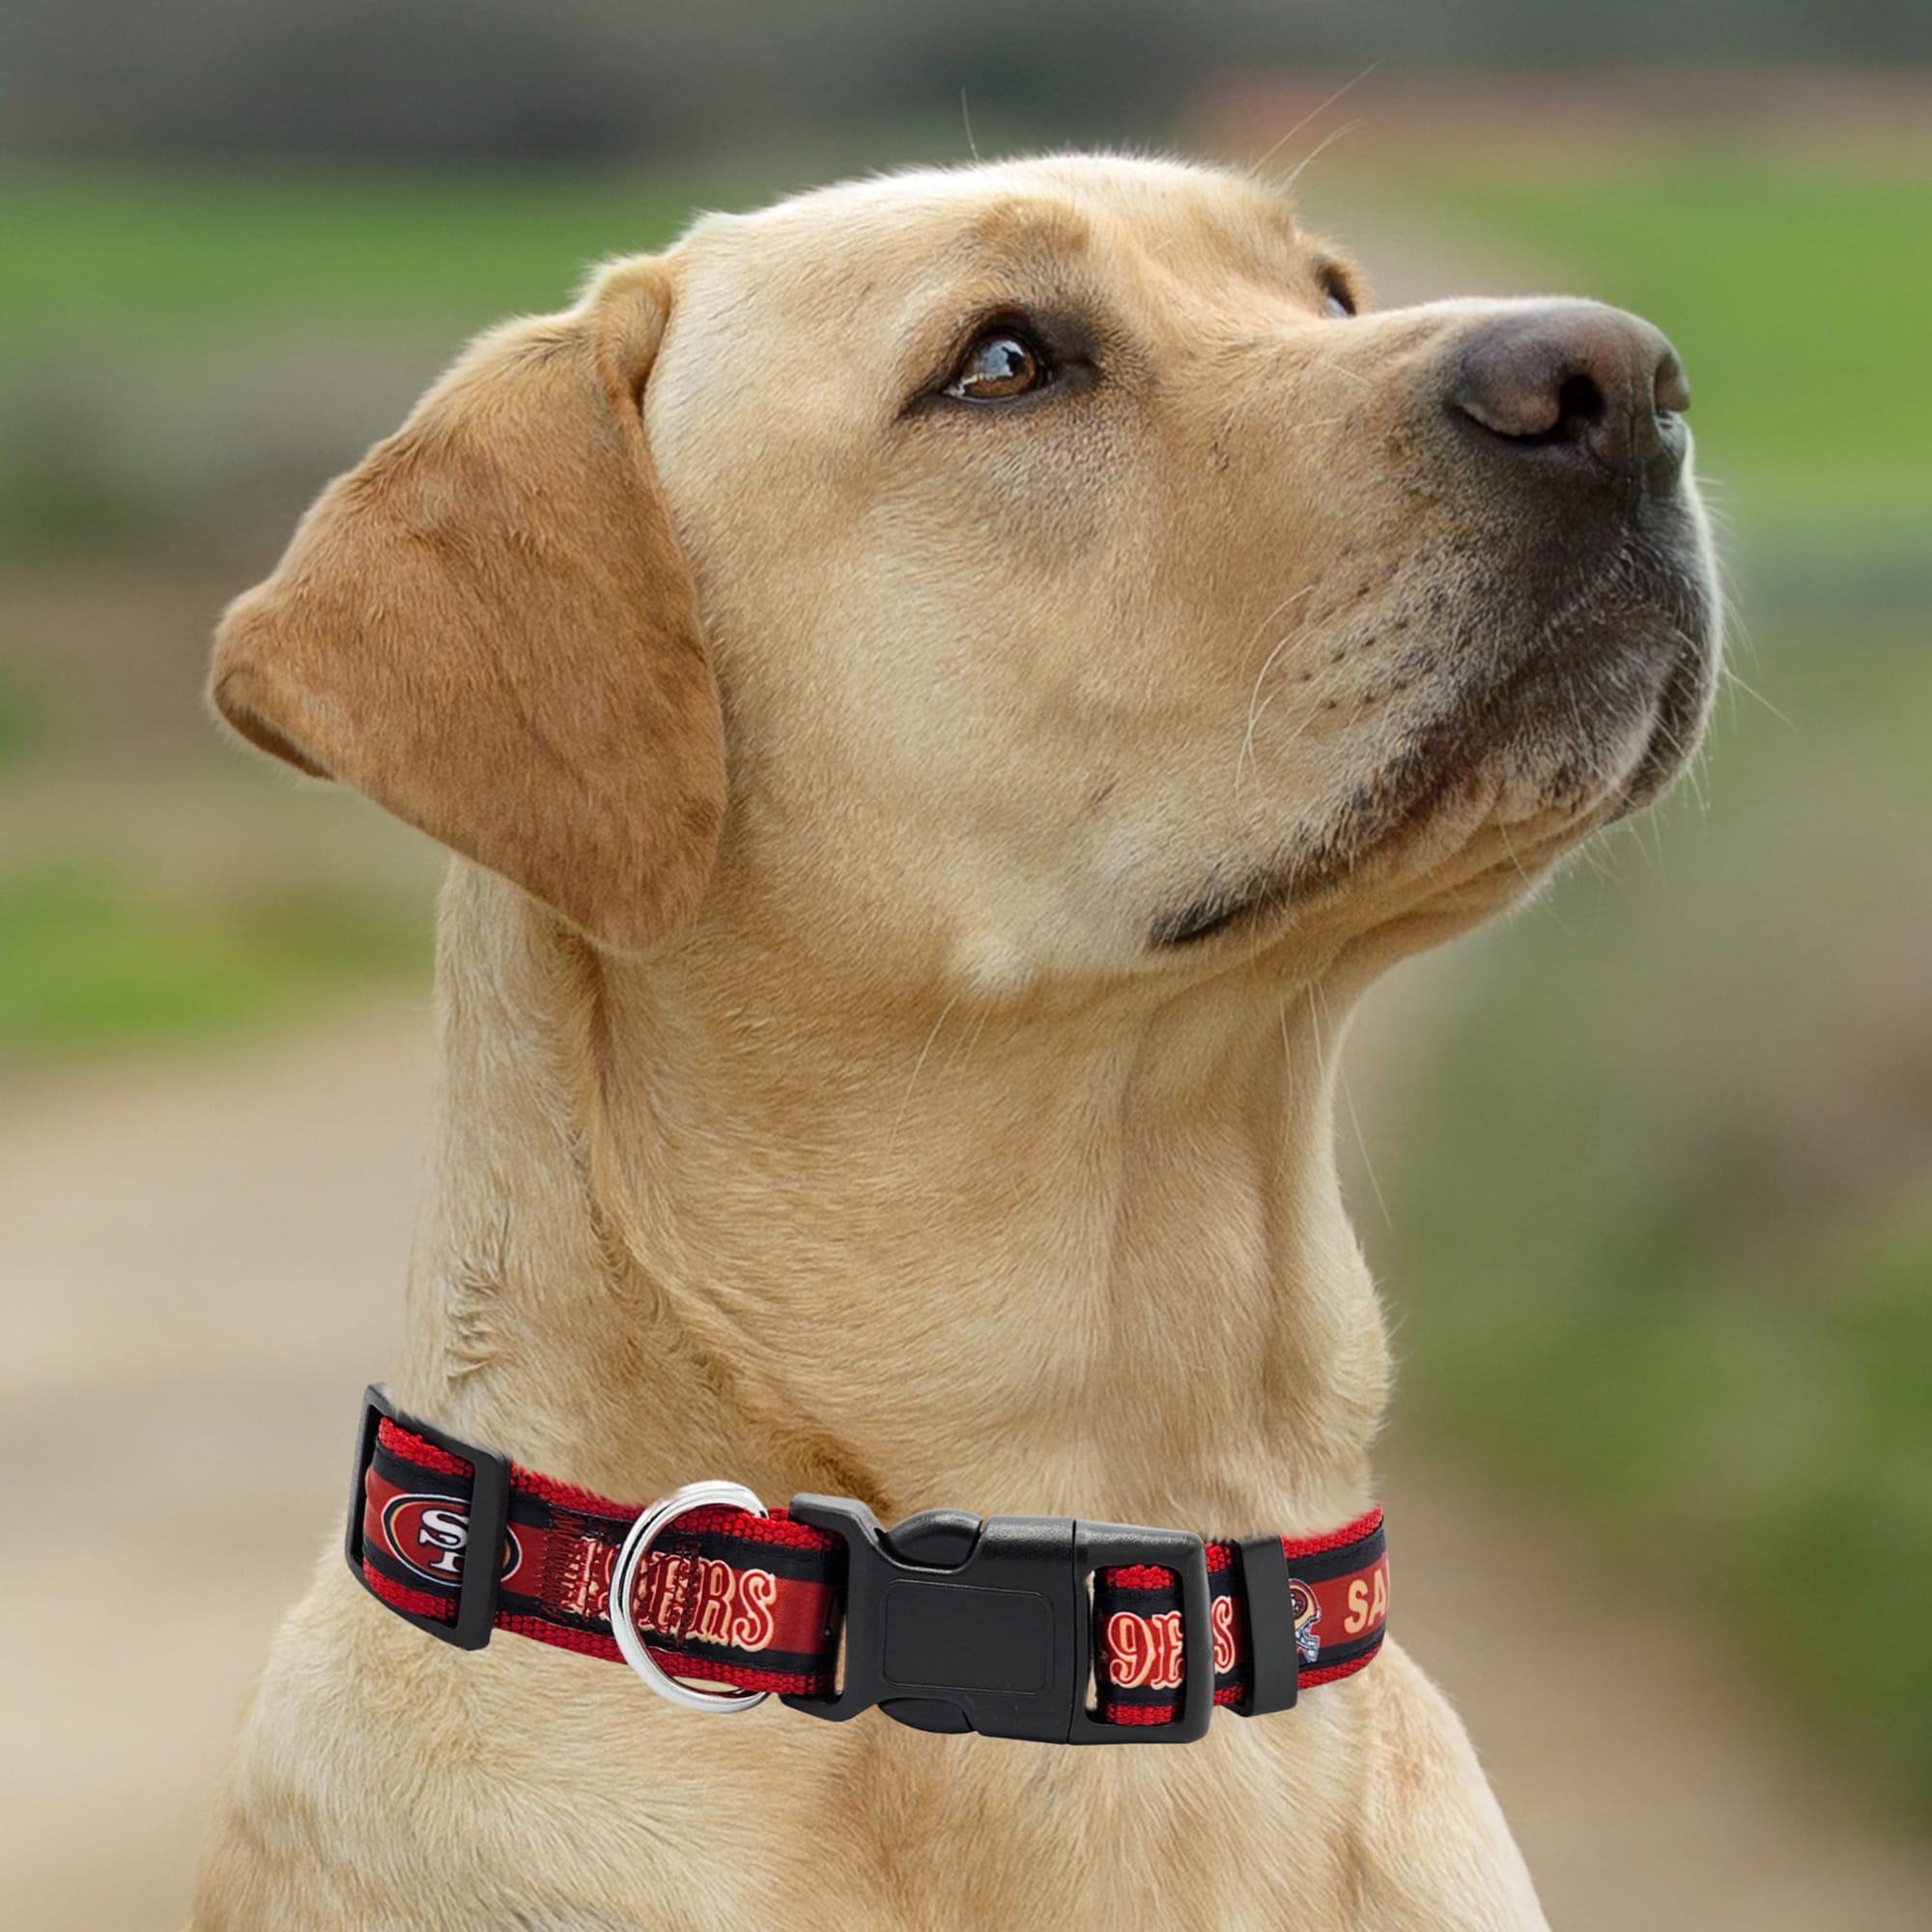 Pets First Las Vegas Raiders Satin Dog Collar, Small